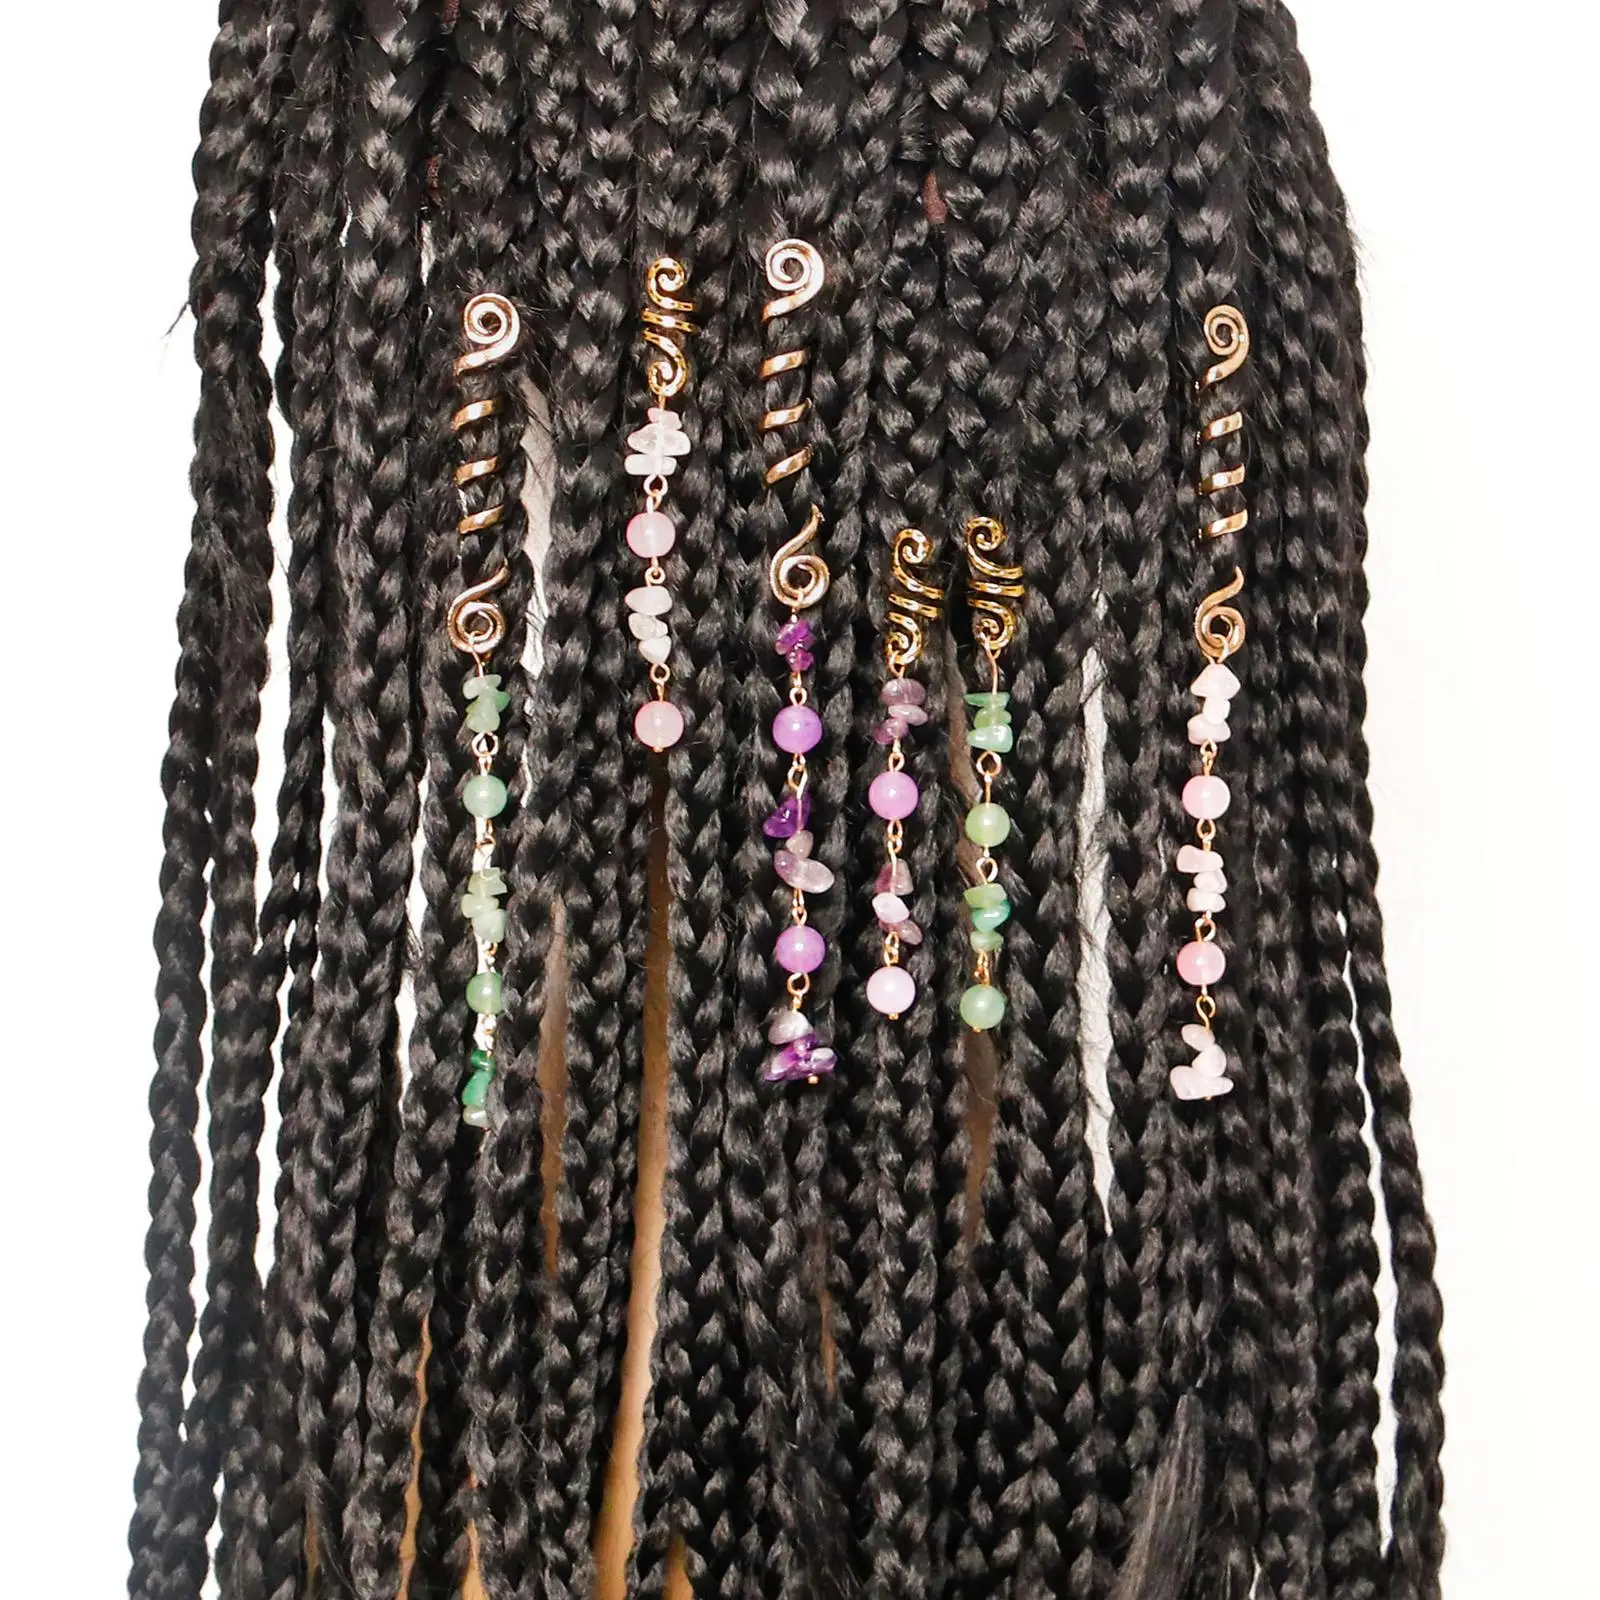 6Pcs Metal Hair Jewelry Dreadlock Hair Clips Pendants Decoration Braiding Hair Cuffs Charms for Women Girls